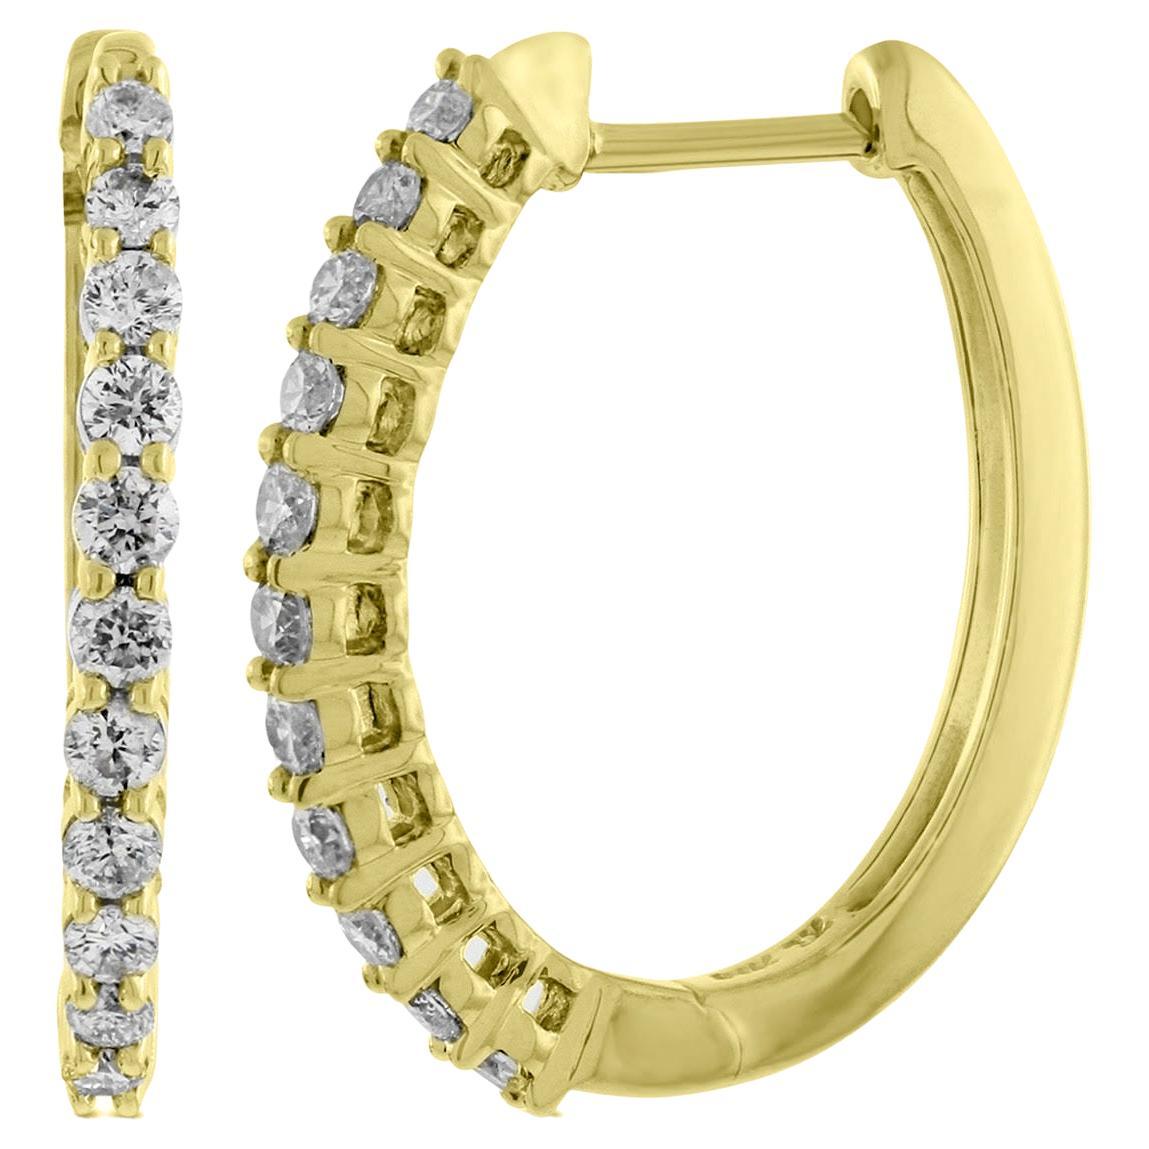 .25 Carat Total Weight Diamond Outside Oval Hoop Earrings in 14K Yellow Gold		